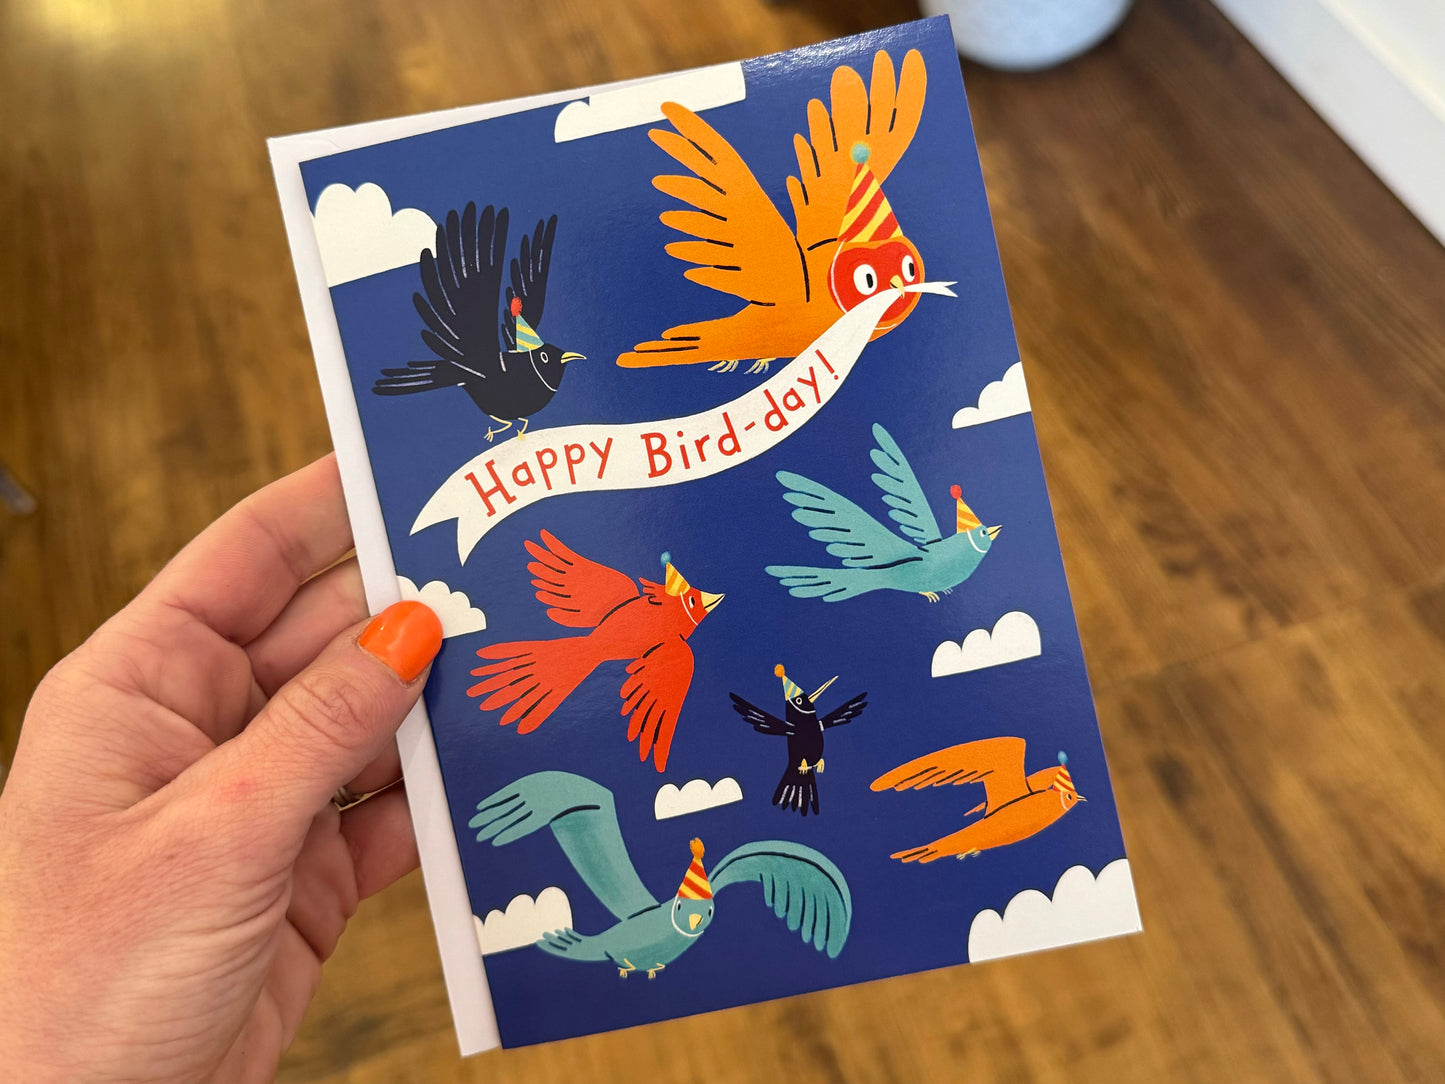 Happy Bird-Day Greeting Card